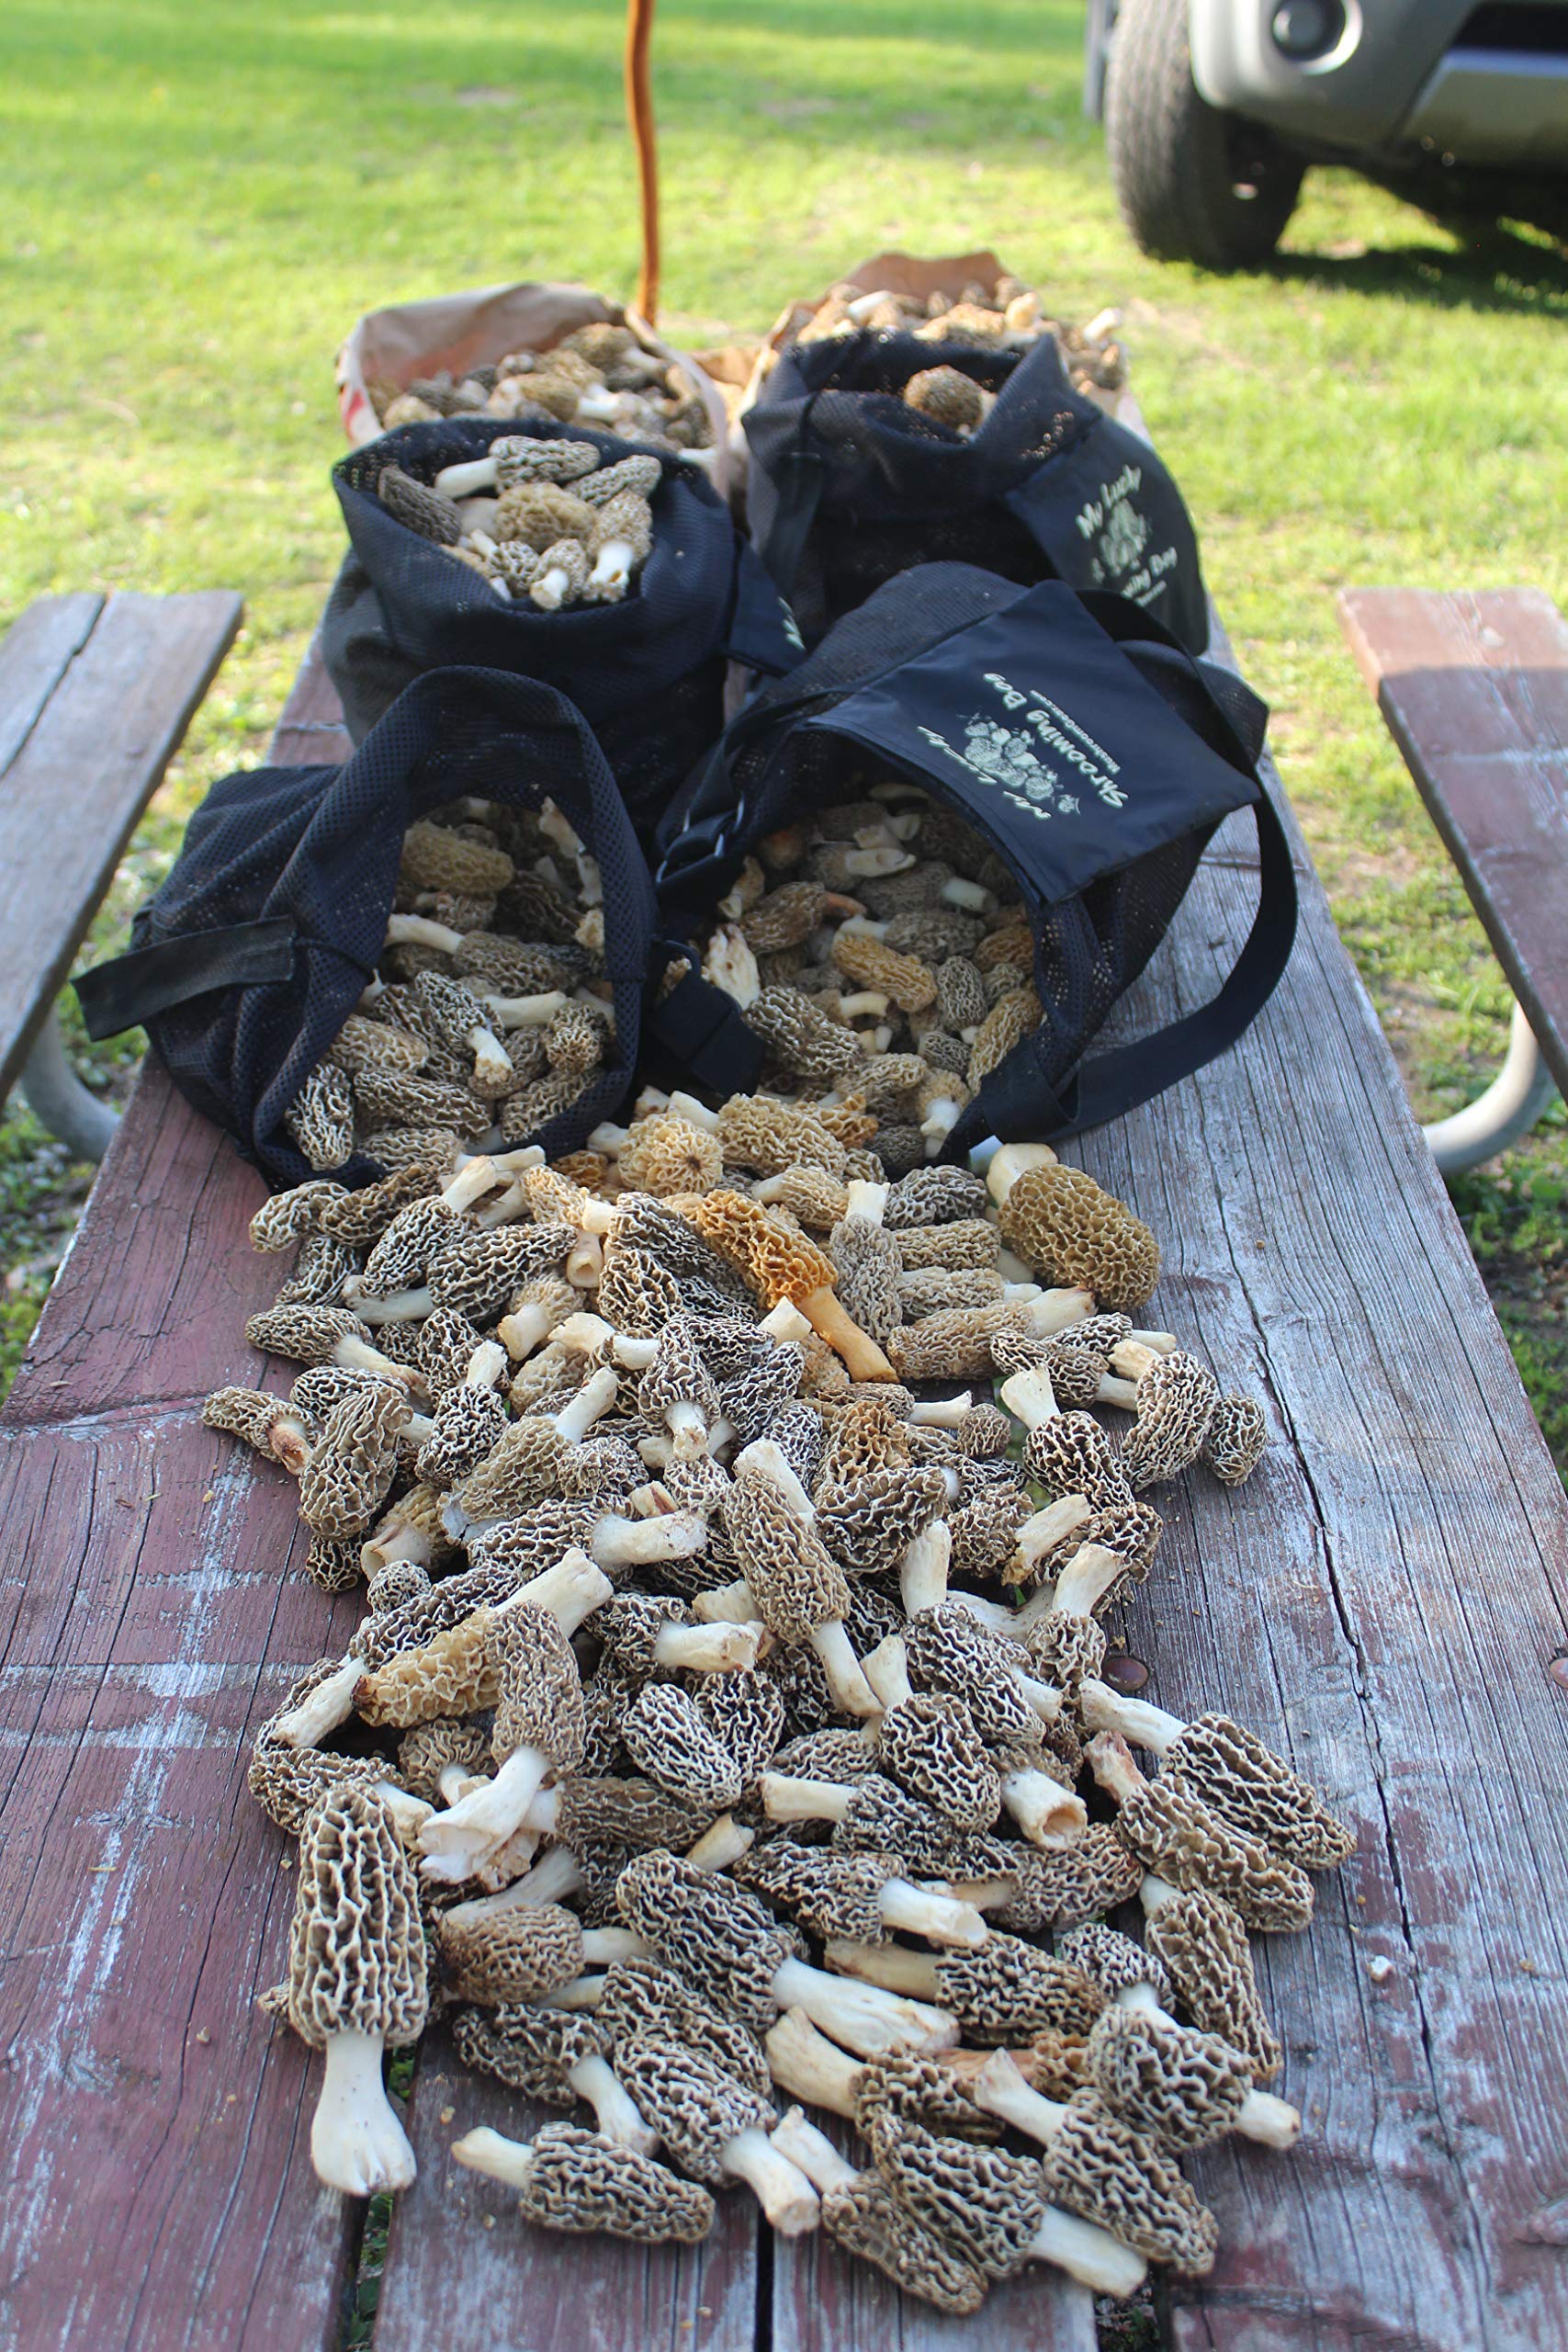 Morel Mushroom Hunting Bag. Made in USA